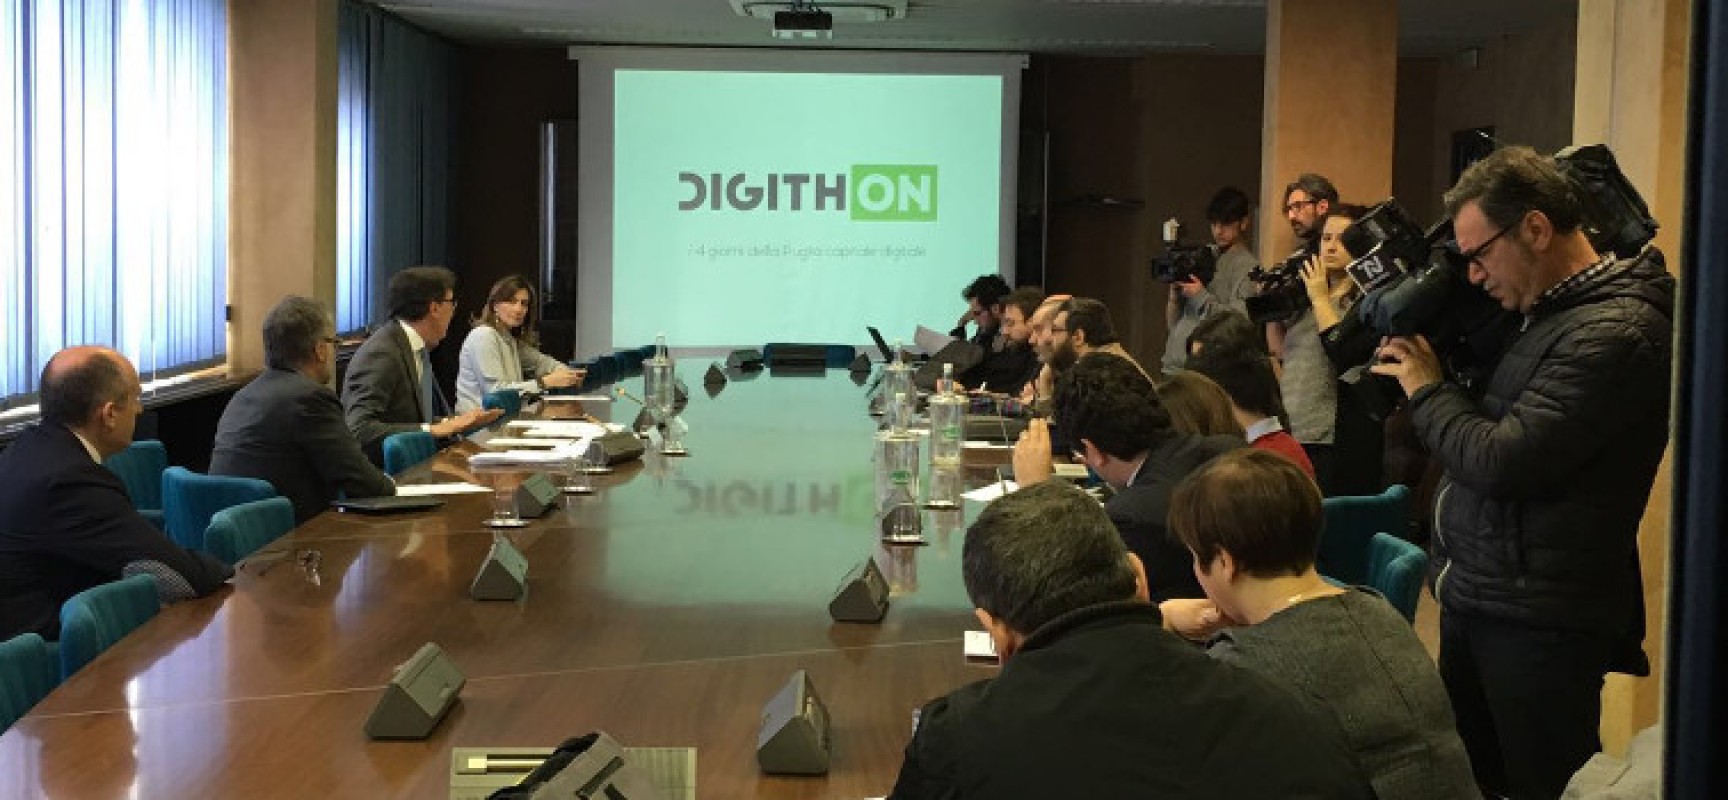 L’avvocato Biagio Lorusso elogia DigithON: “Cernobbio è qui”